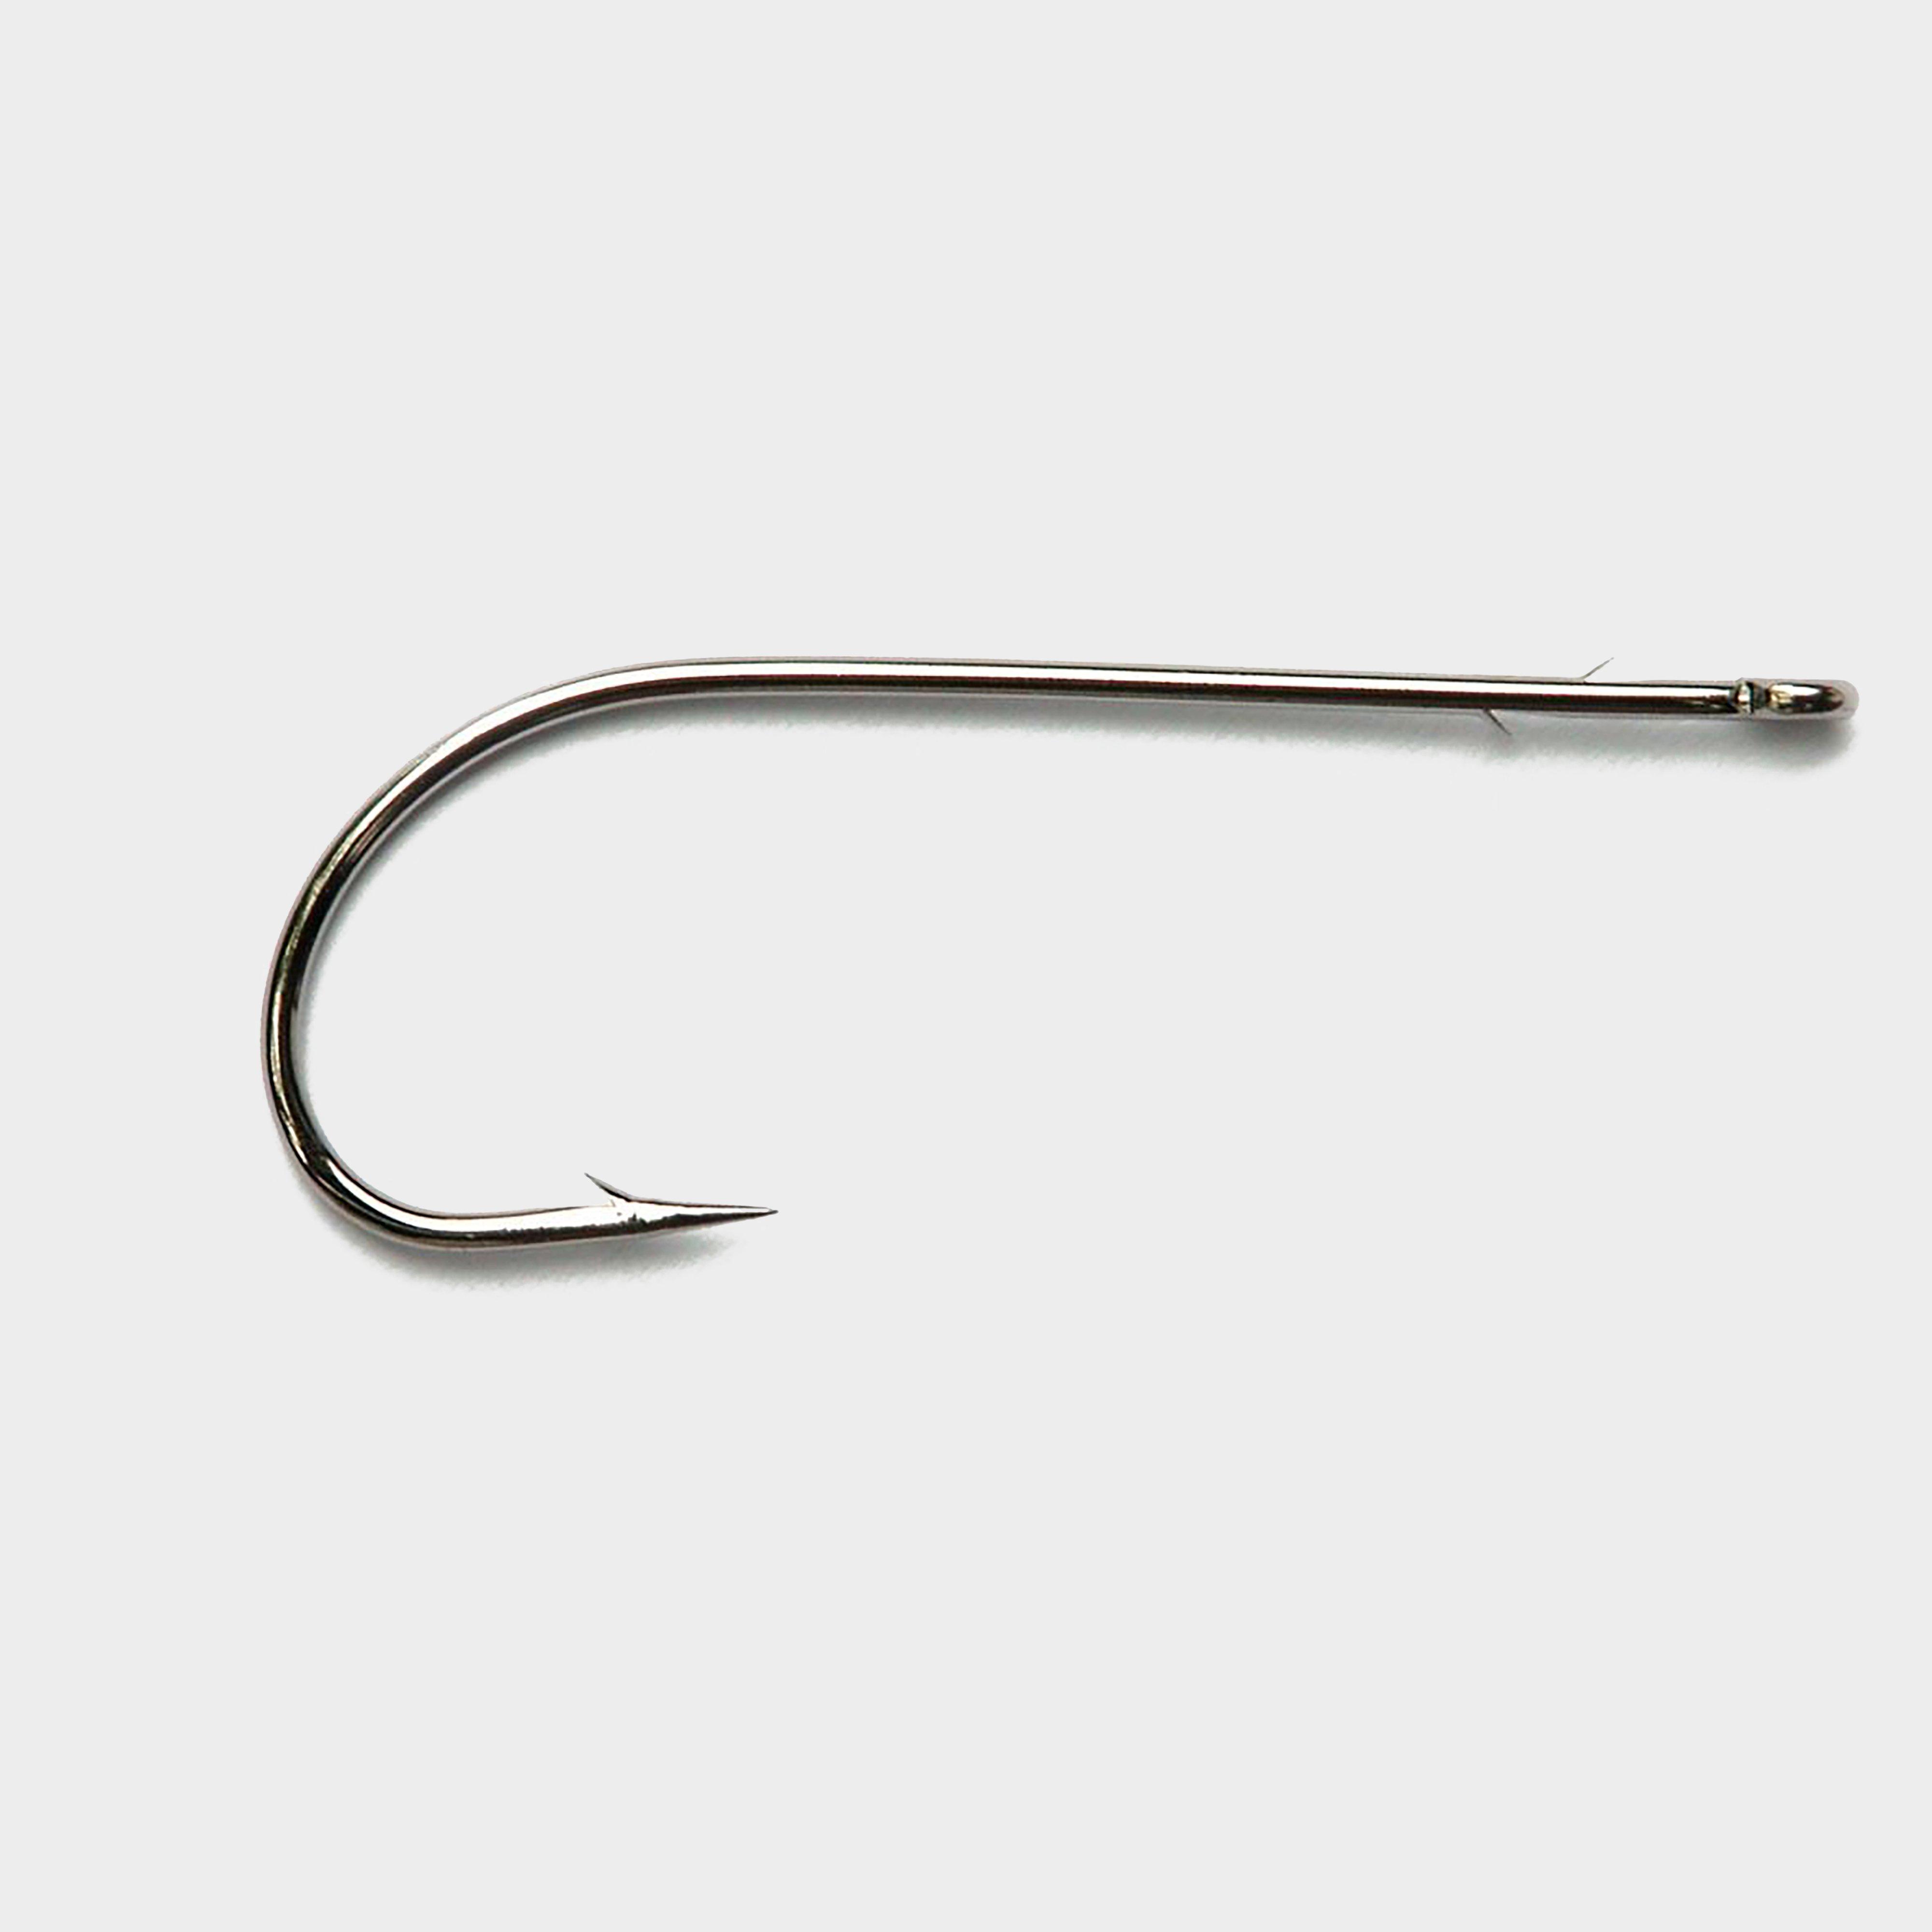 Photos - Fishing Hook / Jig Head Mustad Worm Hook 10 x 25 , Silver (Size 2/0)